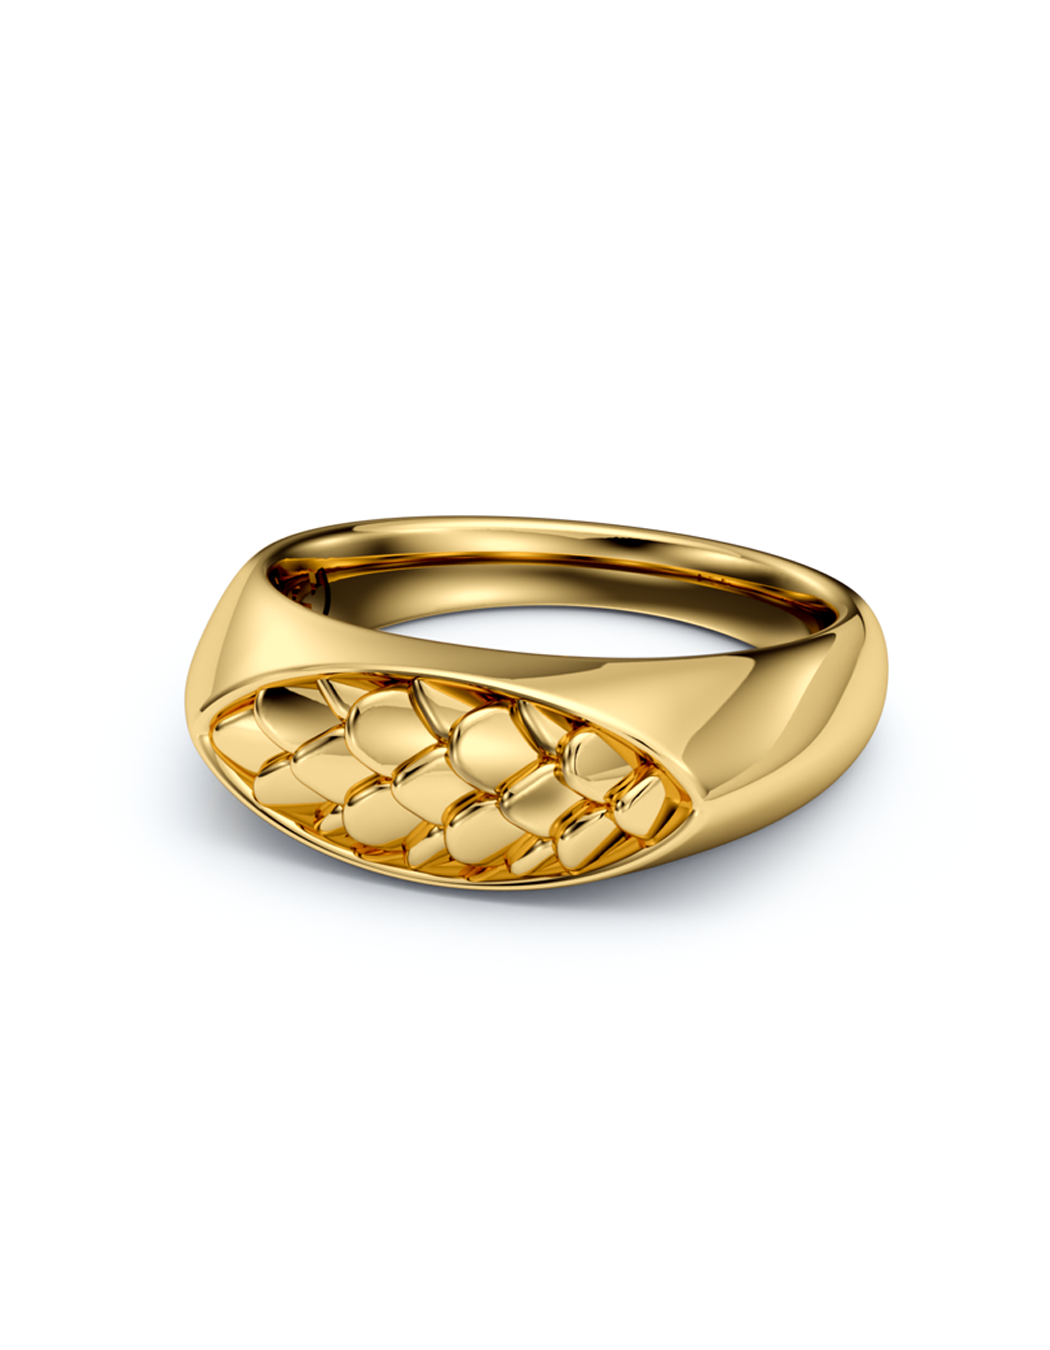 Upscale Signet Ring 14k / 18k Gold